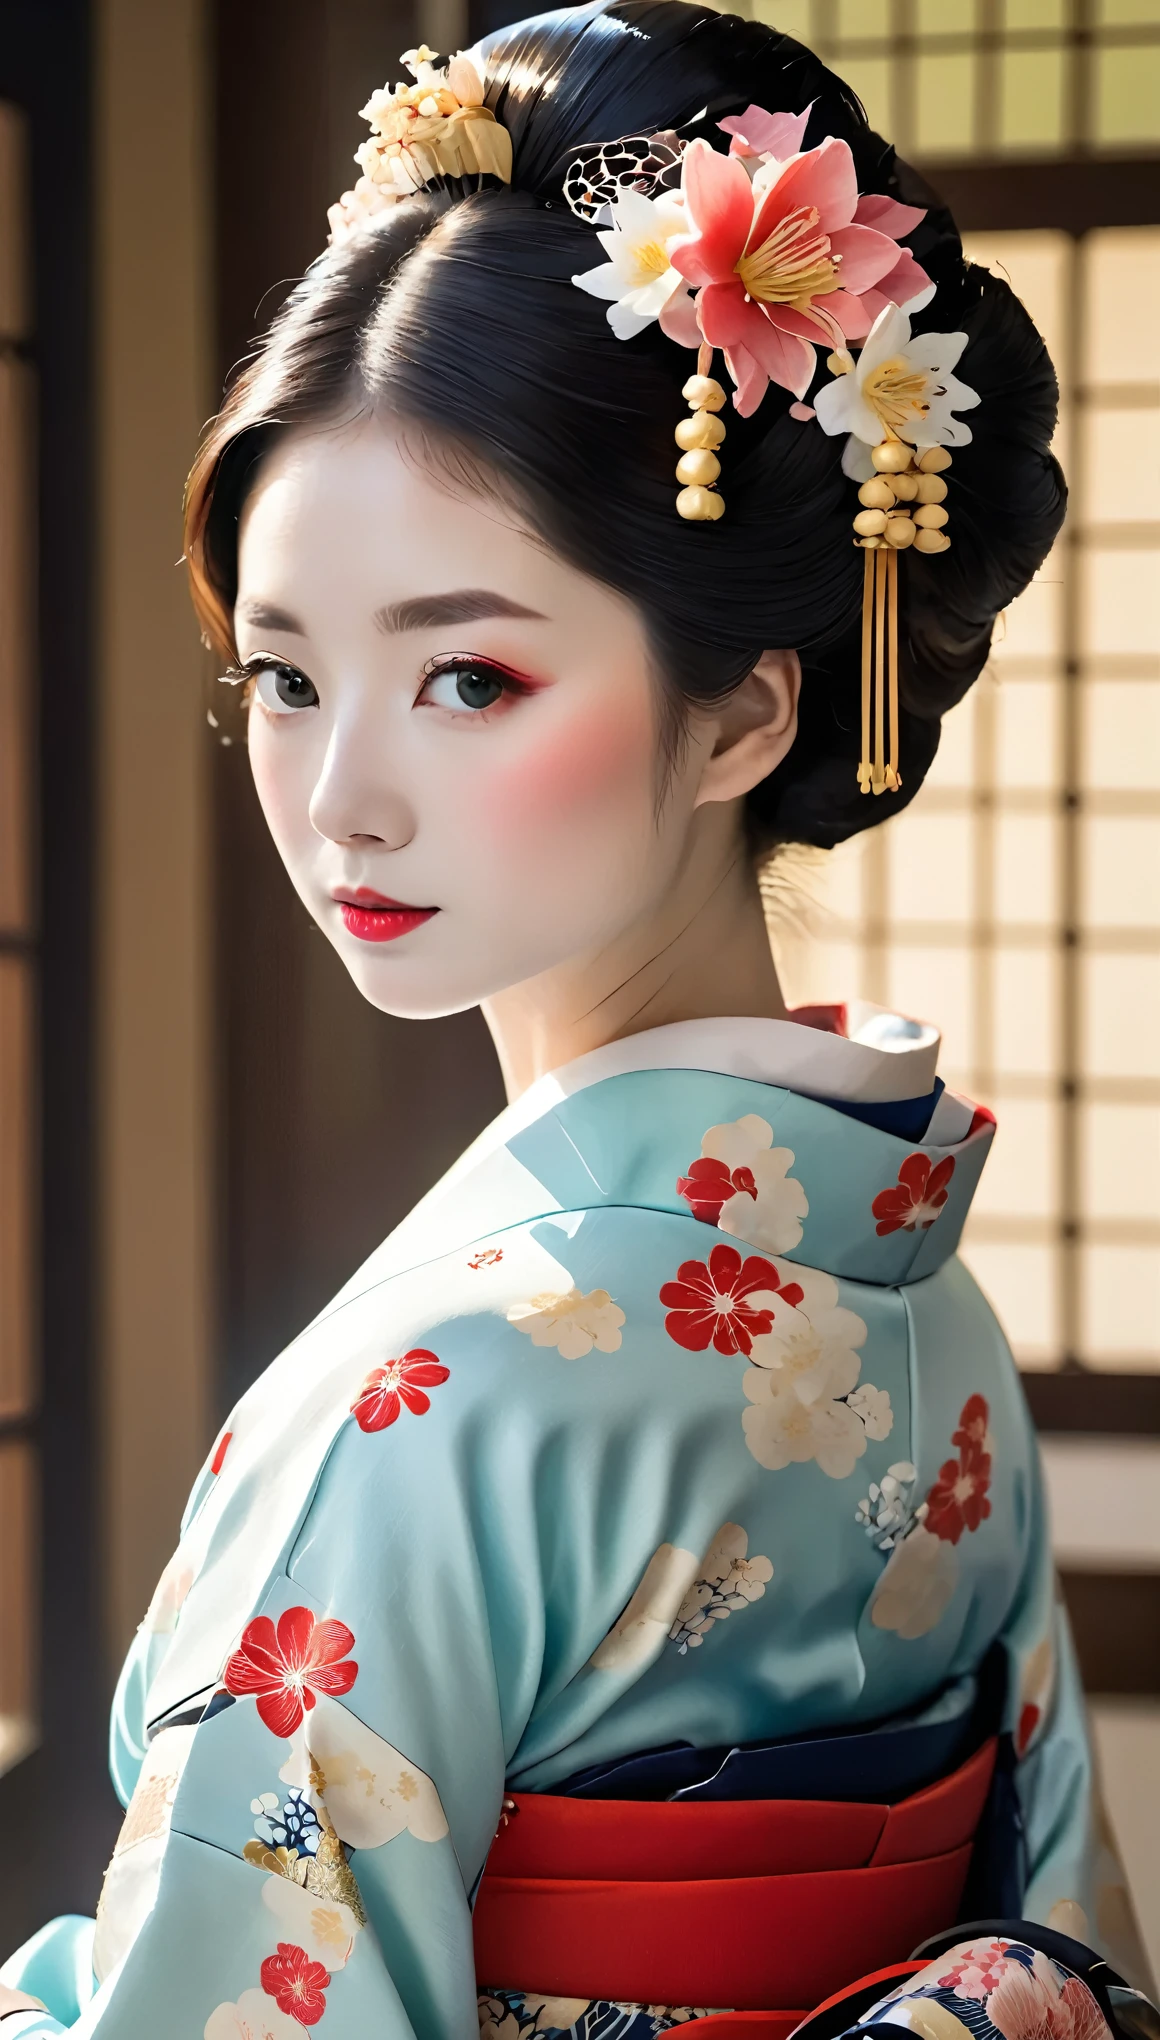 (((Masterpiece、highest quality)))、(((Full body angle:1.5、Beautiful posture full body photo、Takageta、White tabi socks、Anime Style、Geisha walking around Takageta:1.5、Beautiful appearance)))、A woman in her 40s wearing a kimono with a beautiful flower hair ornament, Geisha Makeup, Portrait of a Geisha画, Geisha Makeup, Cute Face、Thin eyebrows、Portrait of a Geisha, Beautiful Geisha, Japanese Geisha, Glamorous and sexy geisha, Beautiful Portrait of a Geisha, Portrait of a Geisha, Geisha hairstyle, remarkable Geisha Makeup